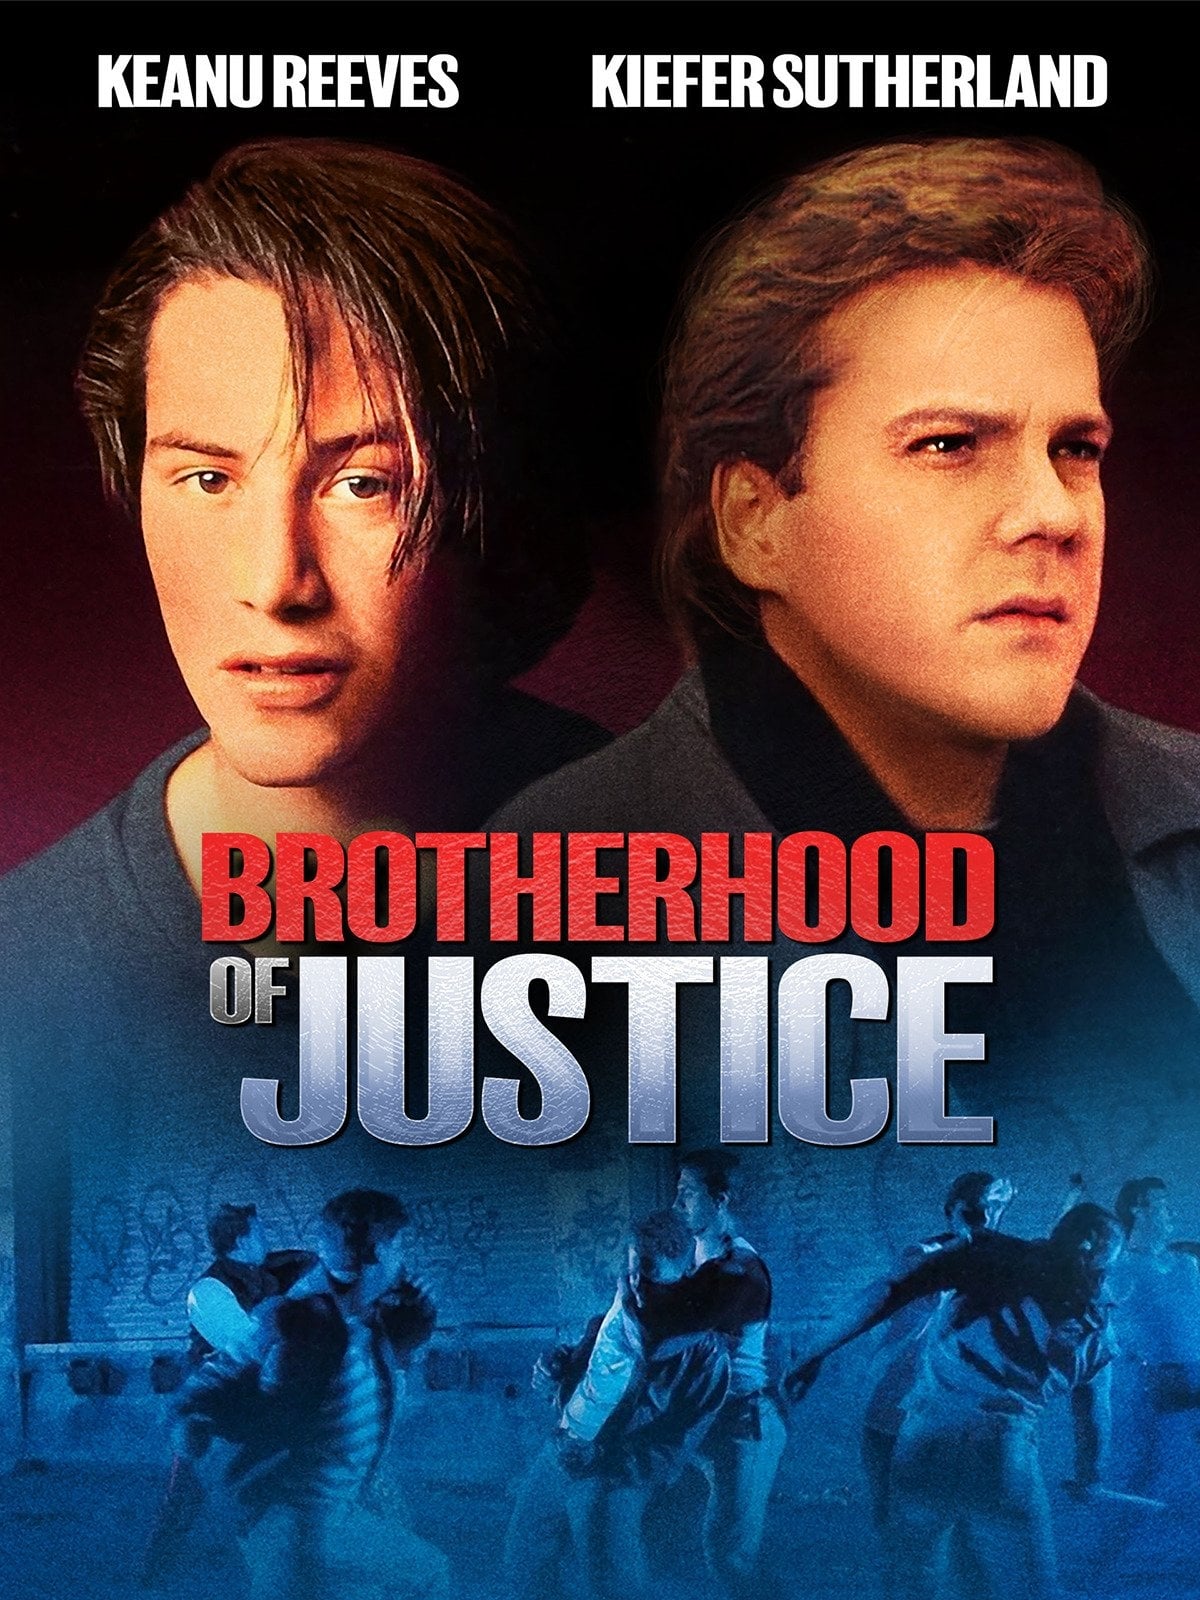 Plakat von "The Brotherhood of Justice"